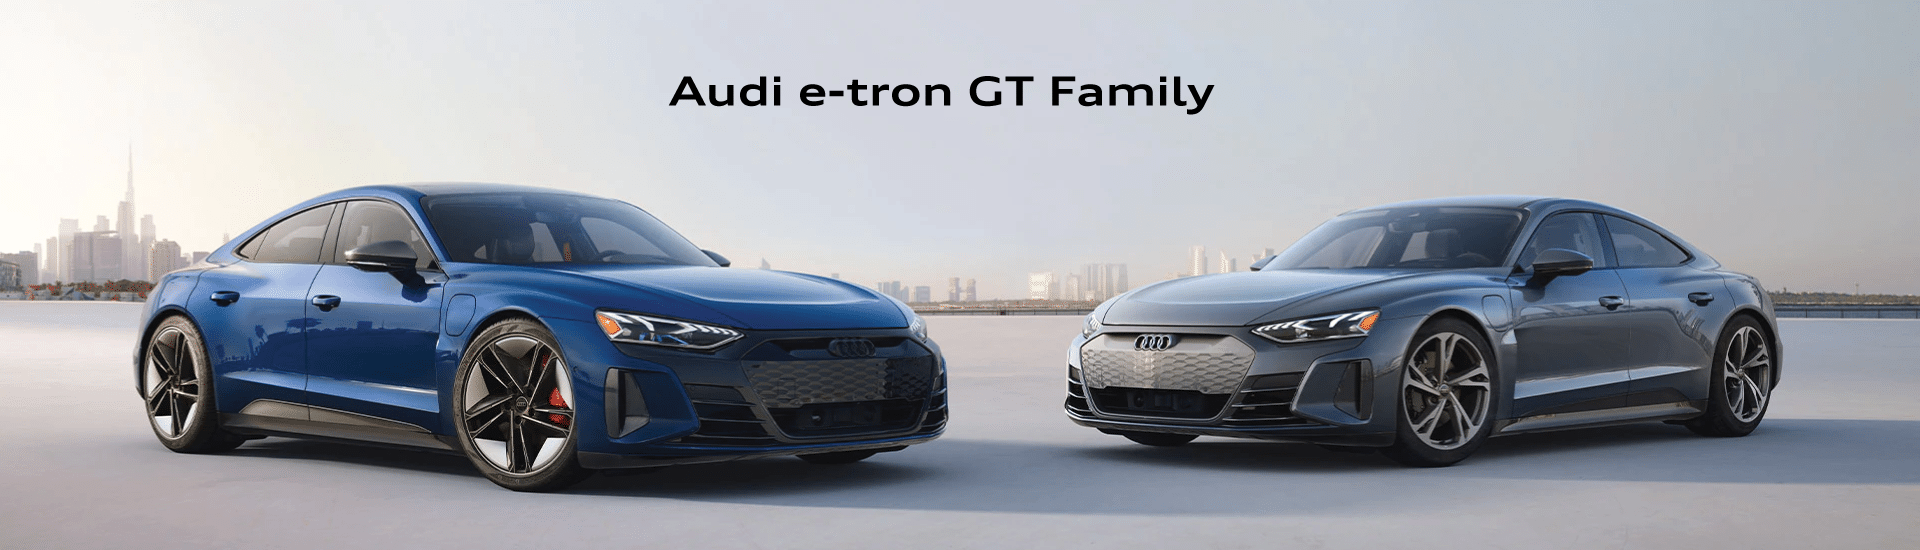 Audi Uptown e-tron GT Family